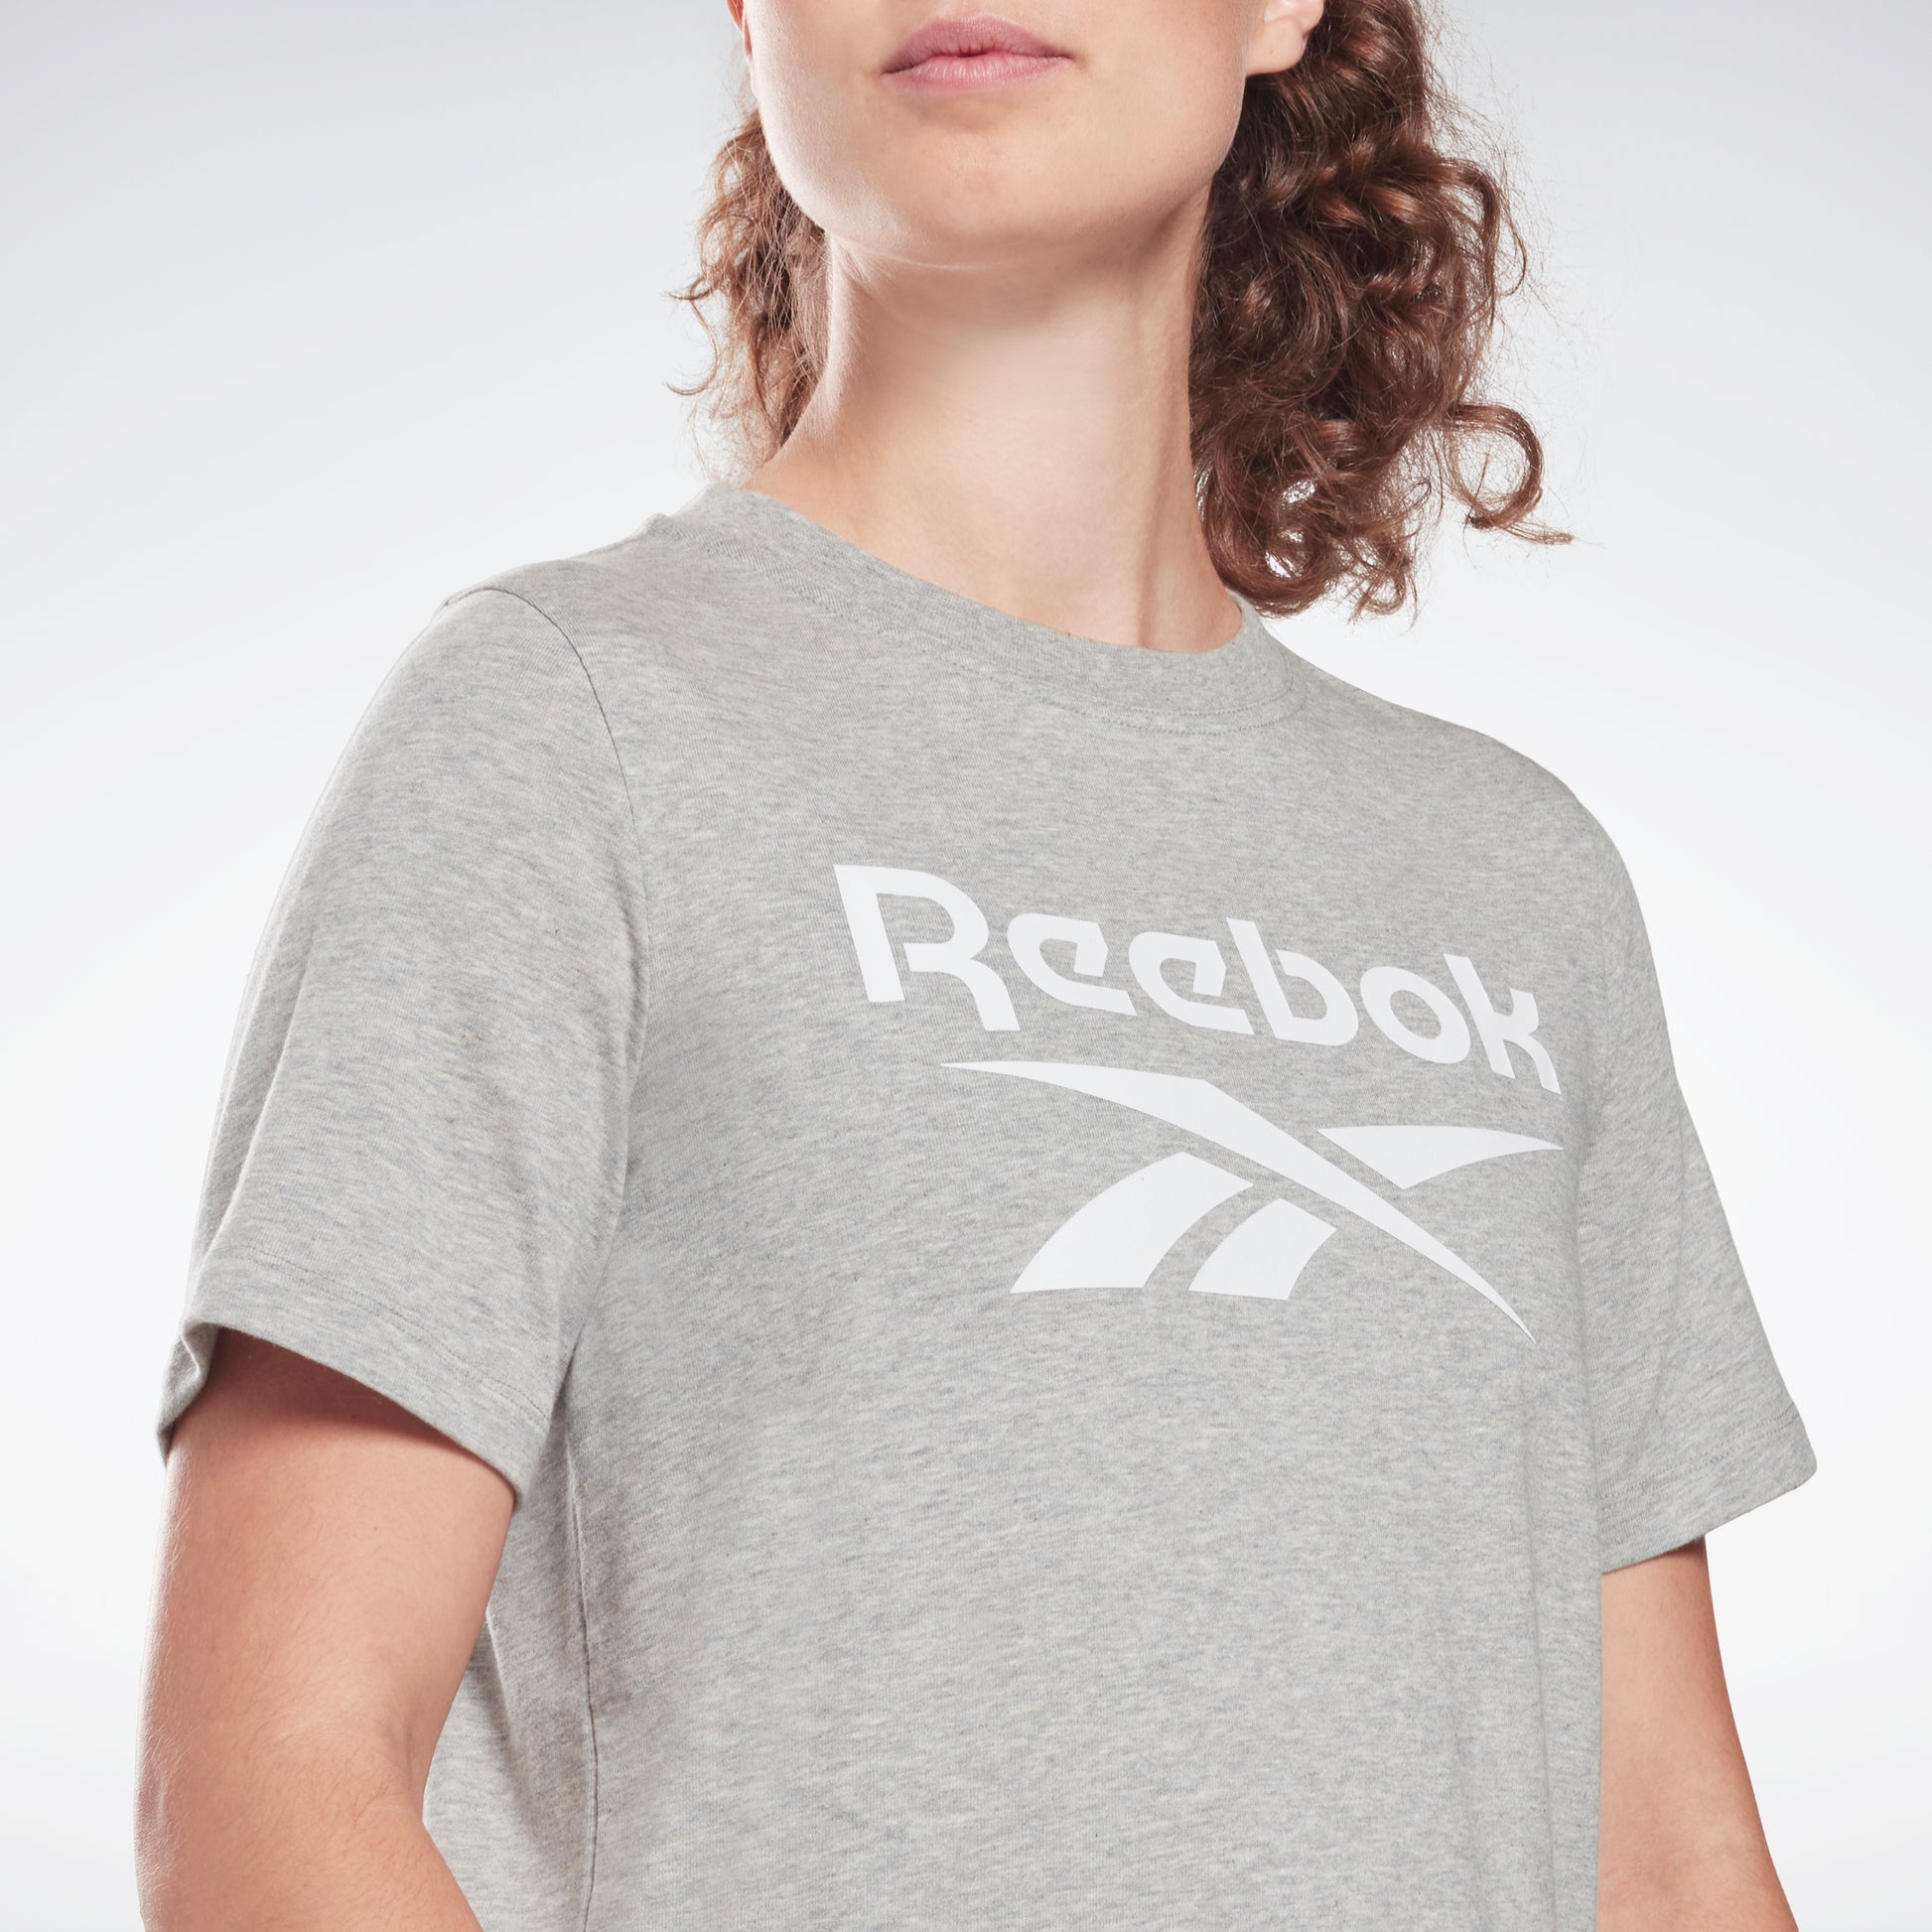 Reebok – Medium Identity T-Shirt Grey Australia Reebok Heather